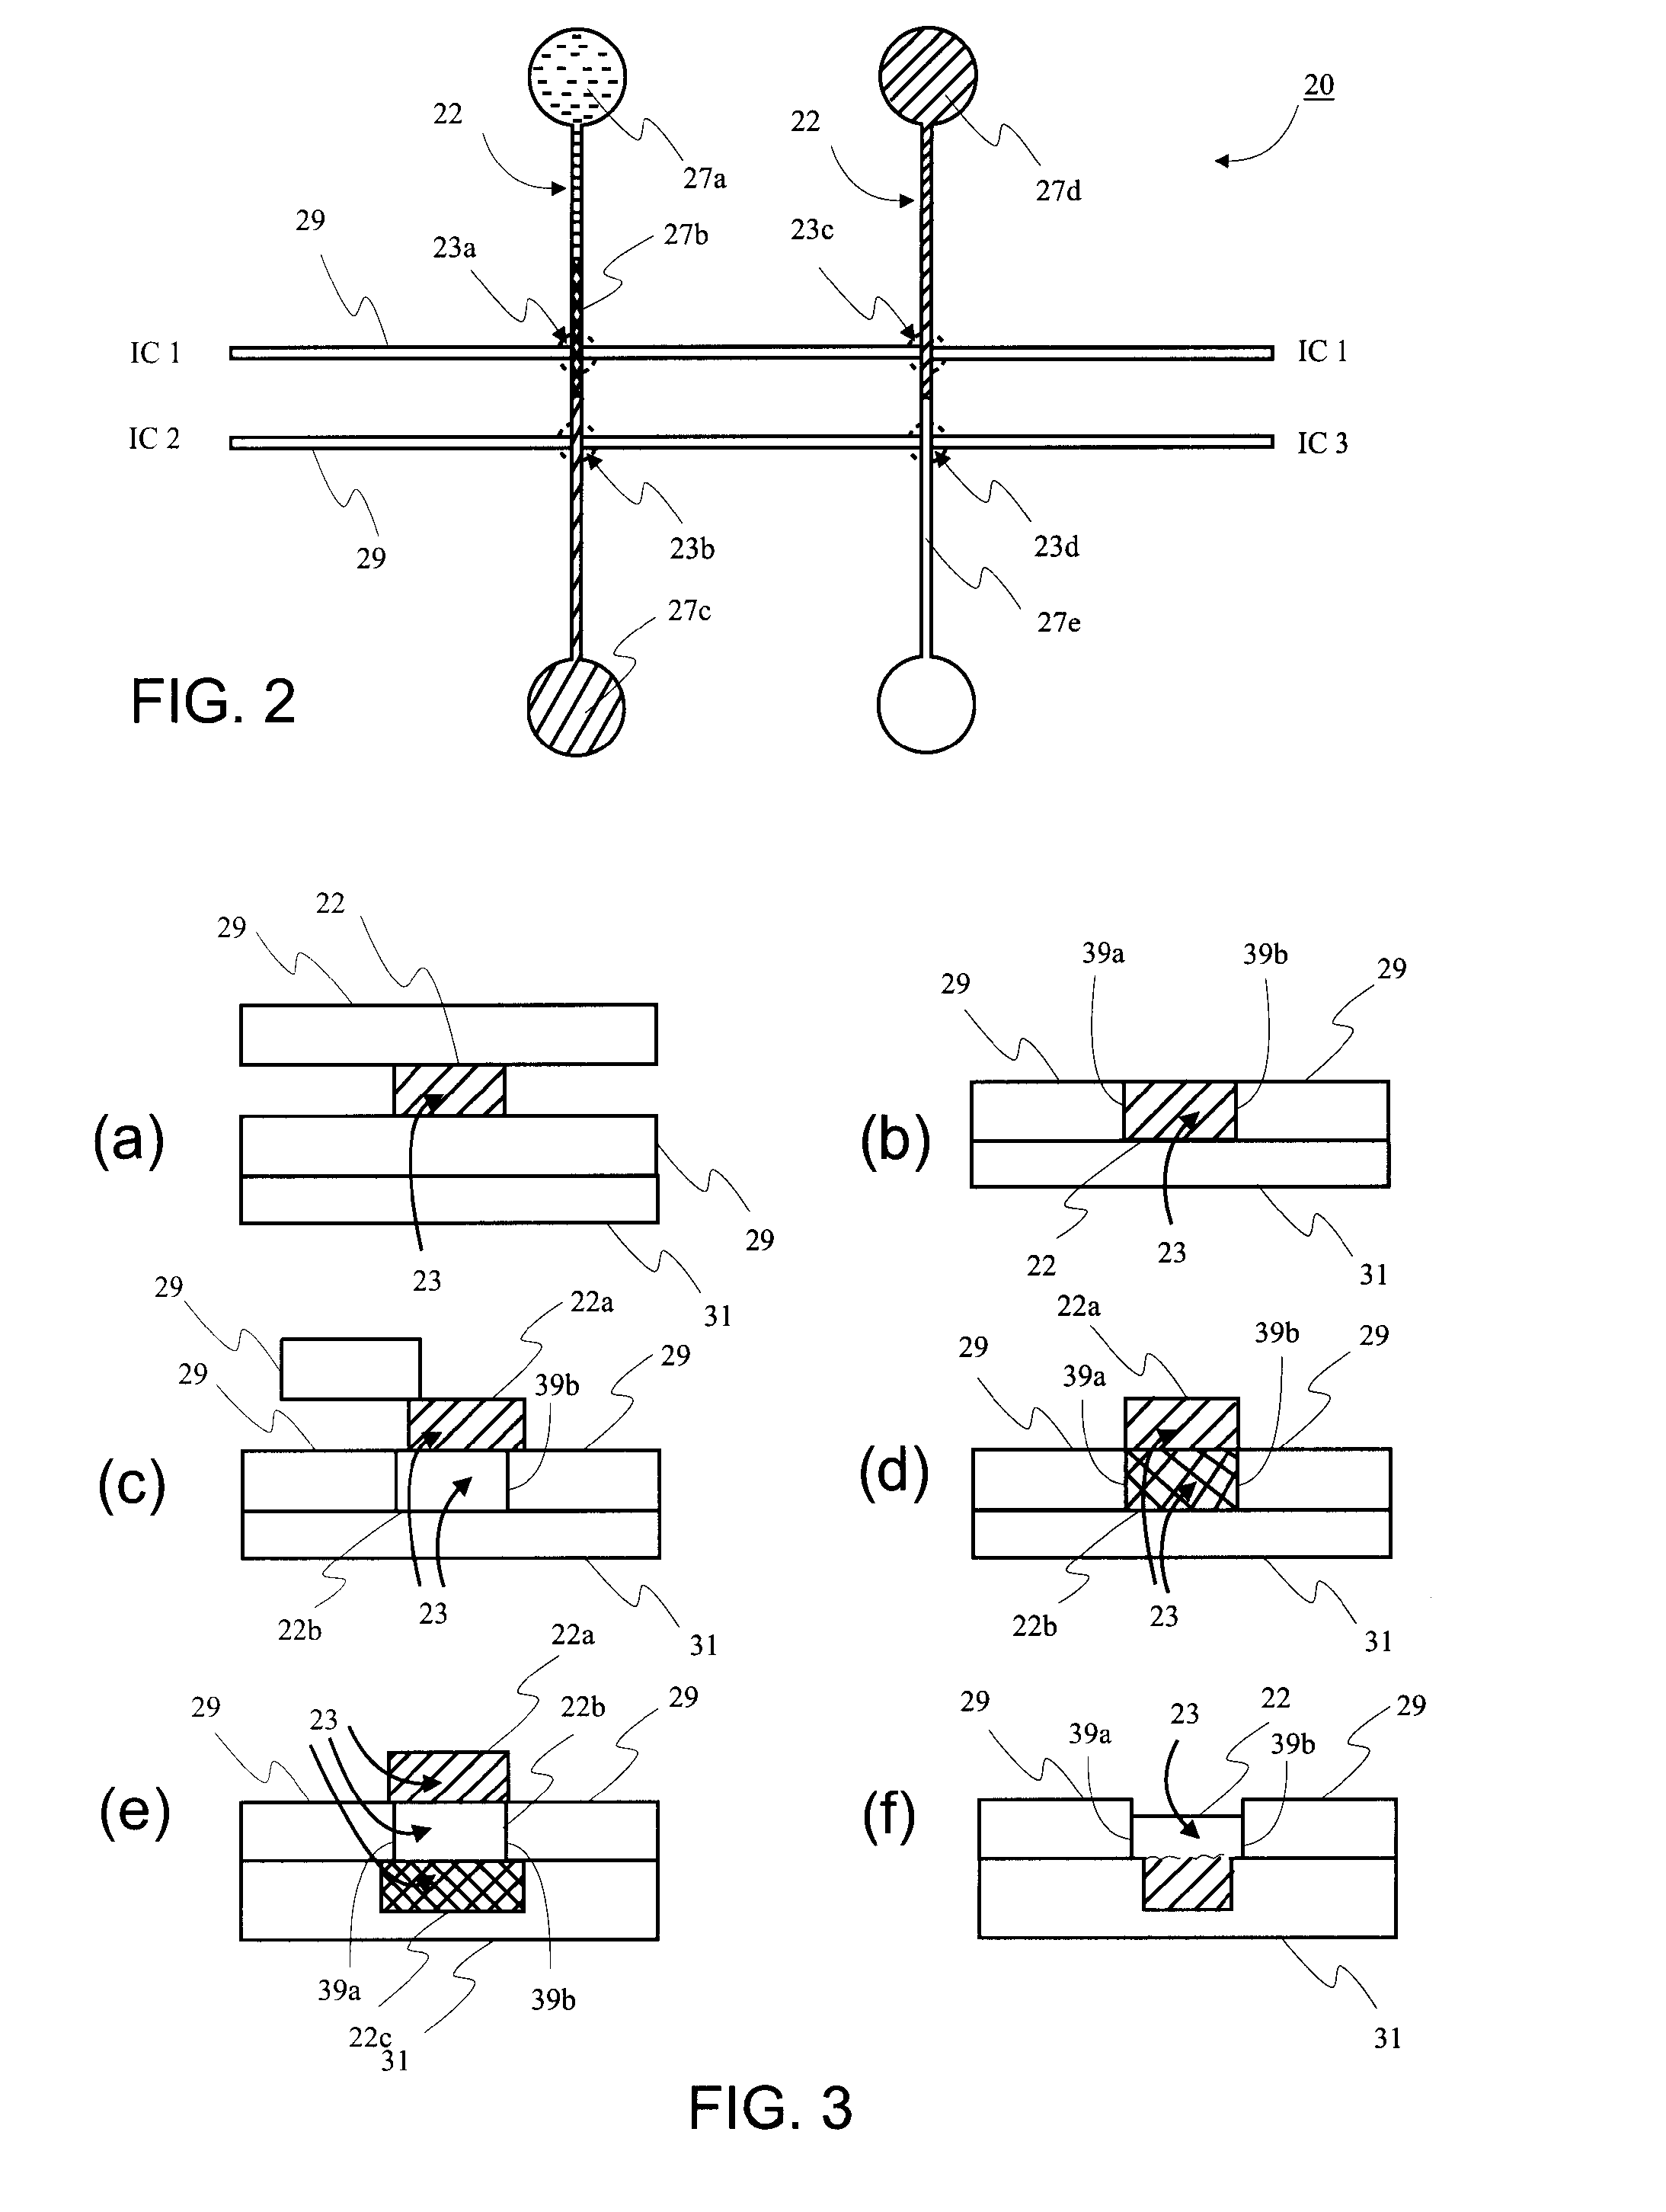 Electronic fluidic indicator and method of indicating